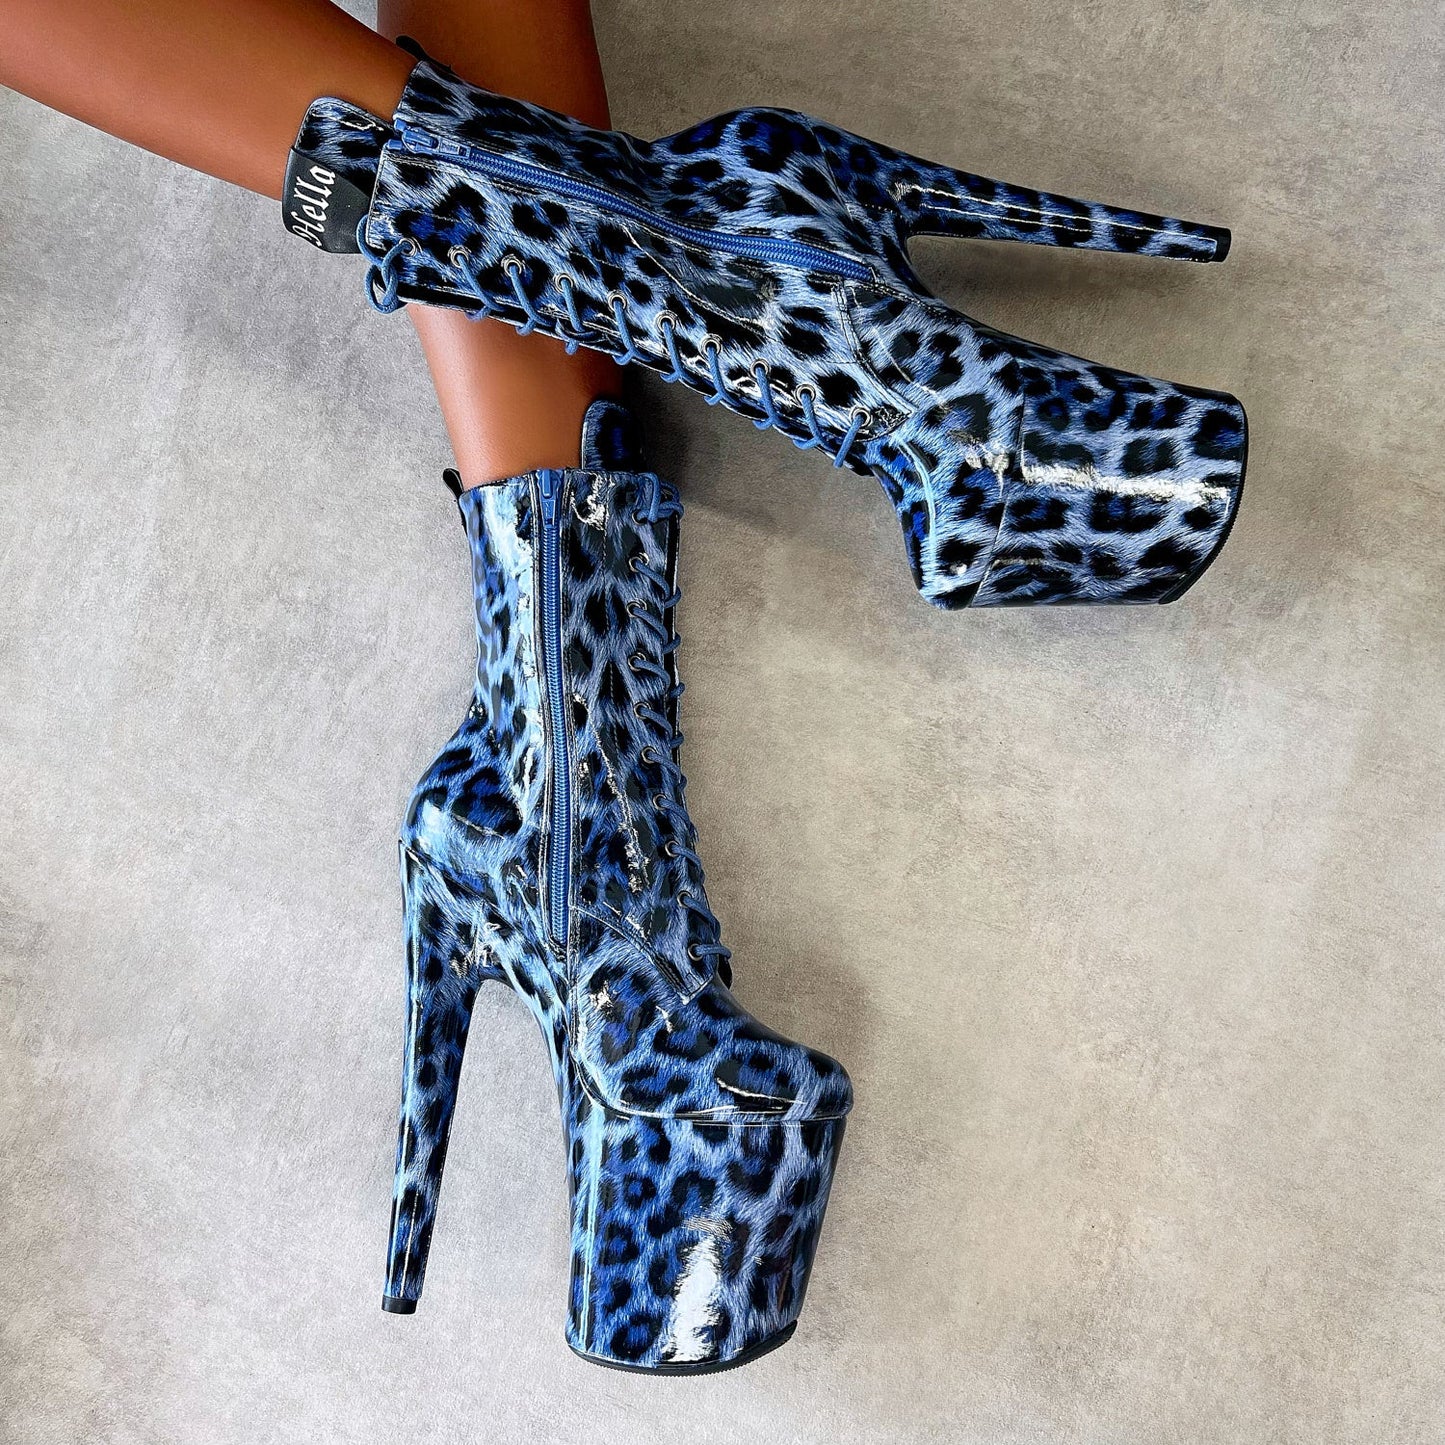 Blue Leopard Boot - 8 INCH, stripper shoe, stripper heel, pole heel, not a pleaser, platform, dancer, pole dance, floor work